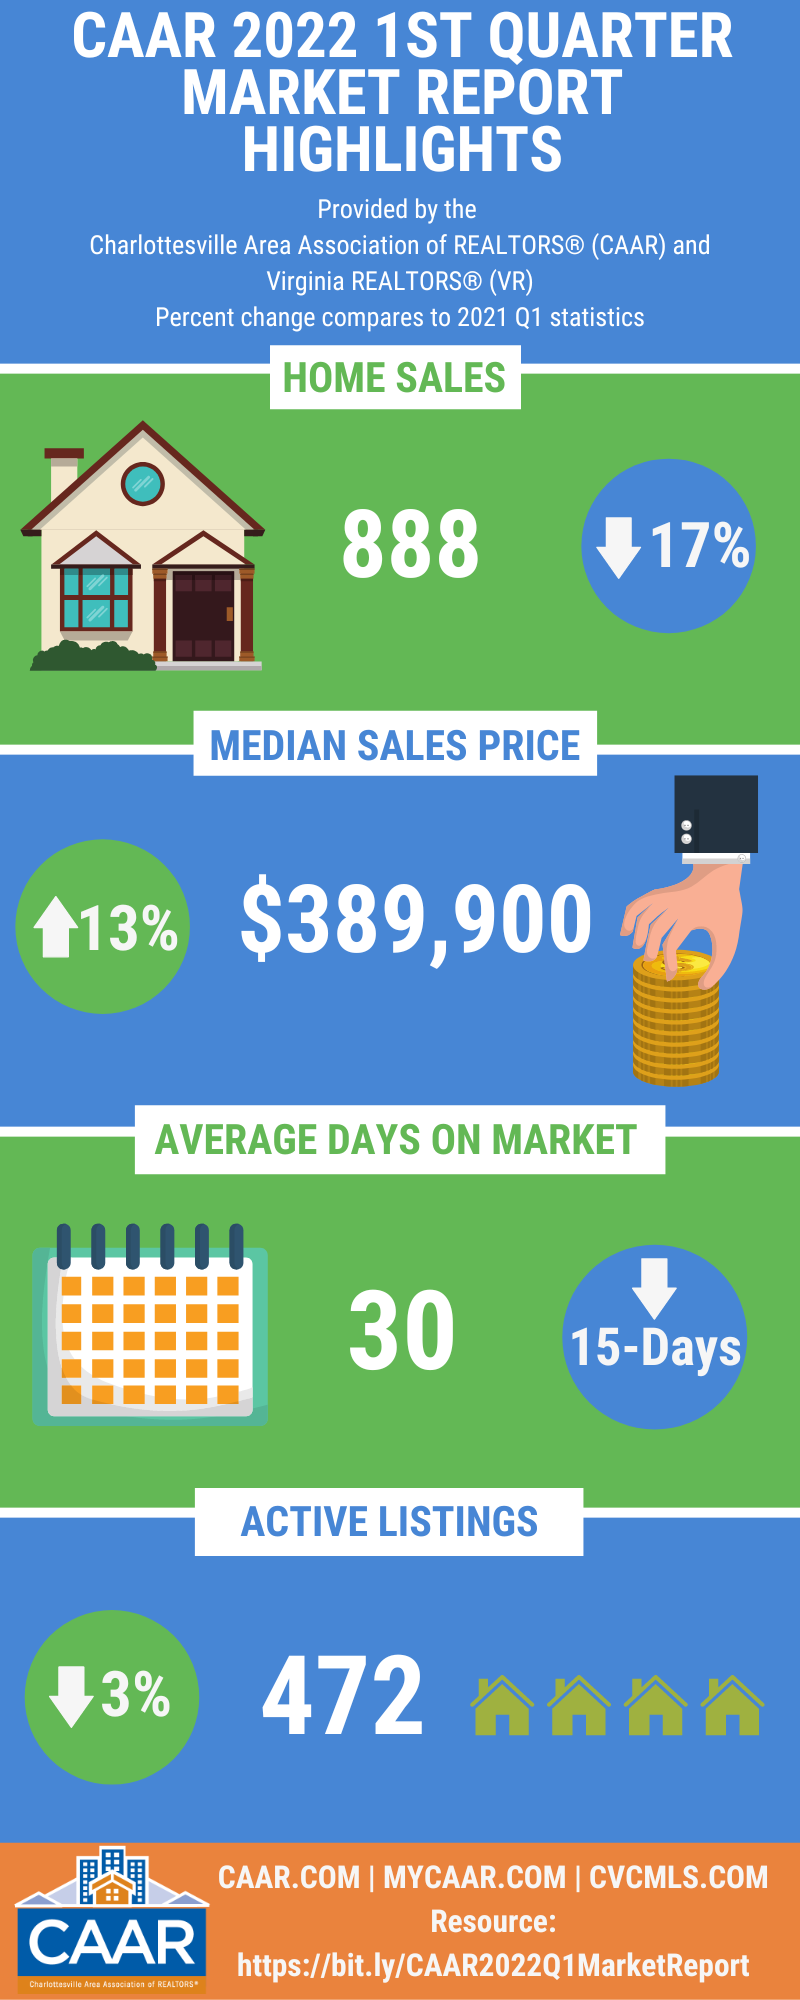 CAAR 2022 1st Quarter Home Sales Report Infographic